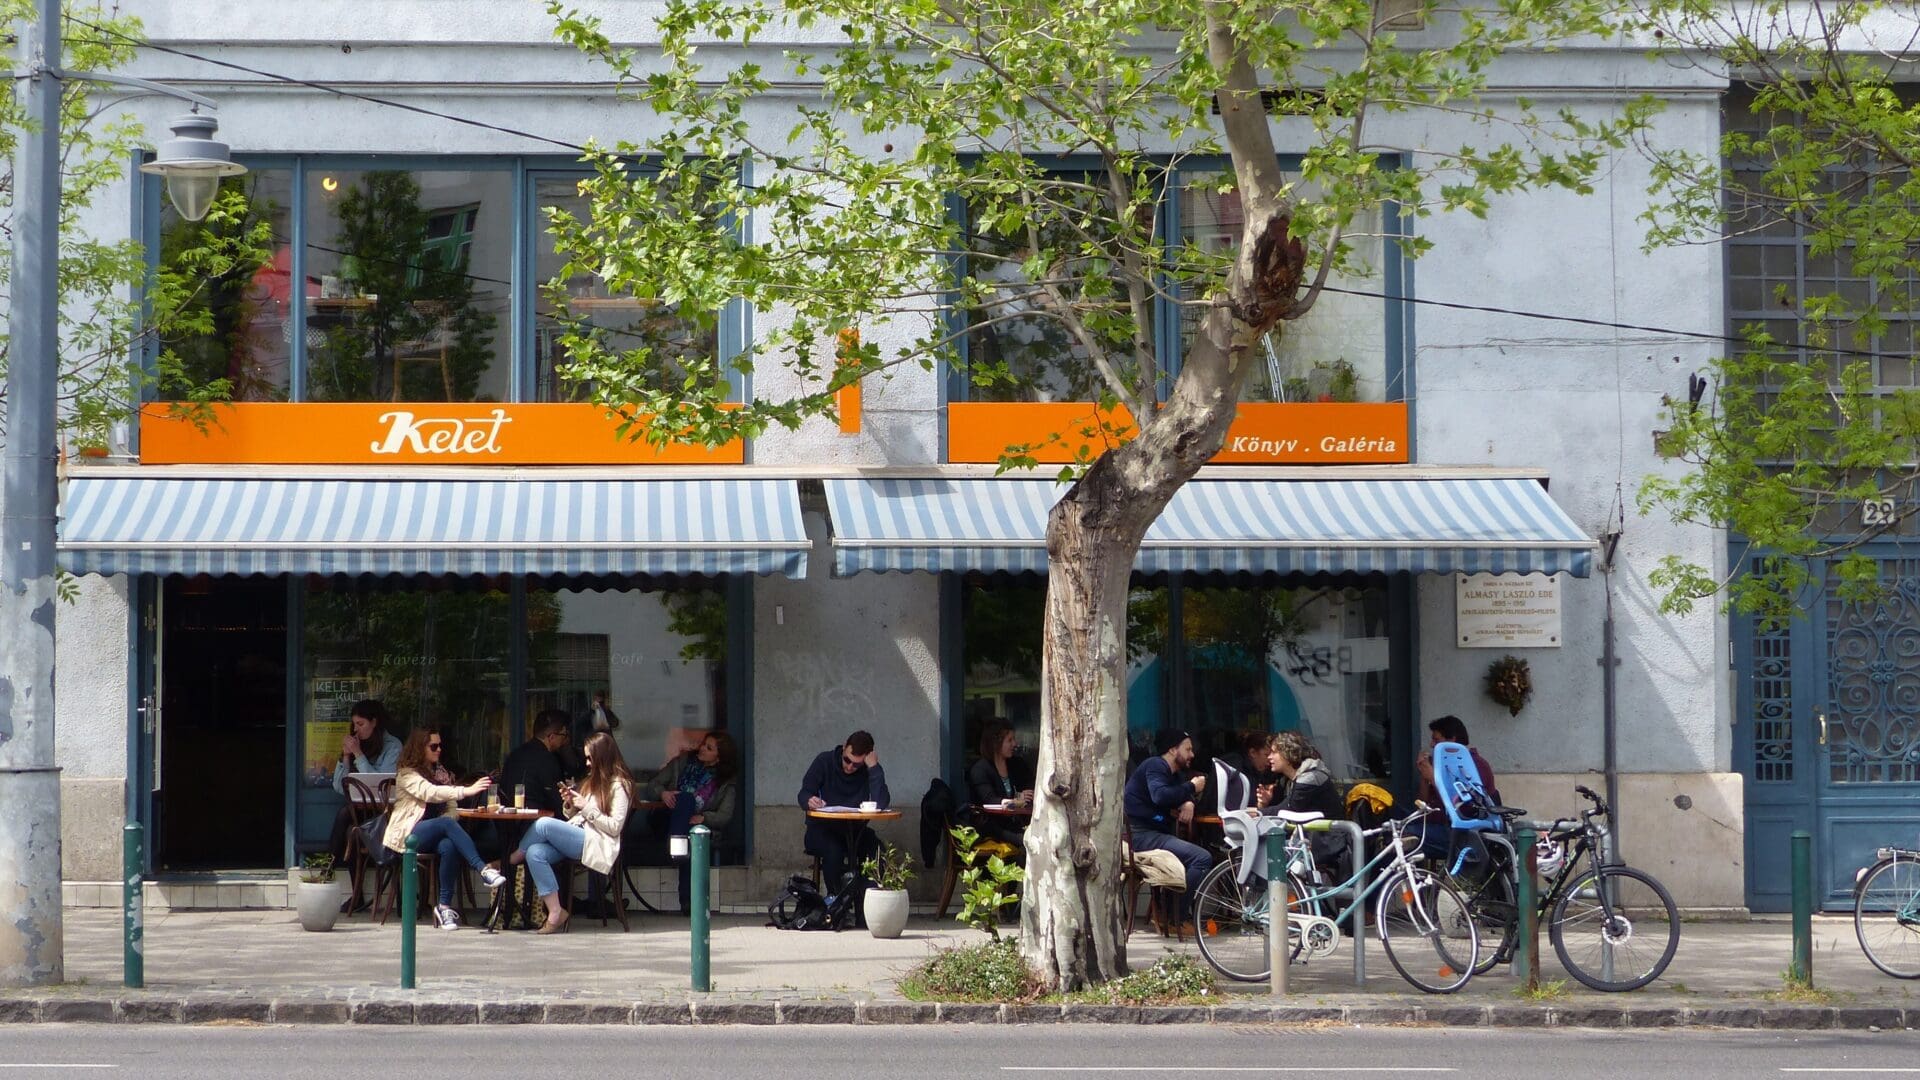 The Kelet Café in Budapest.